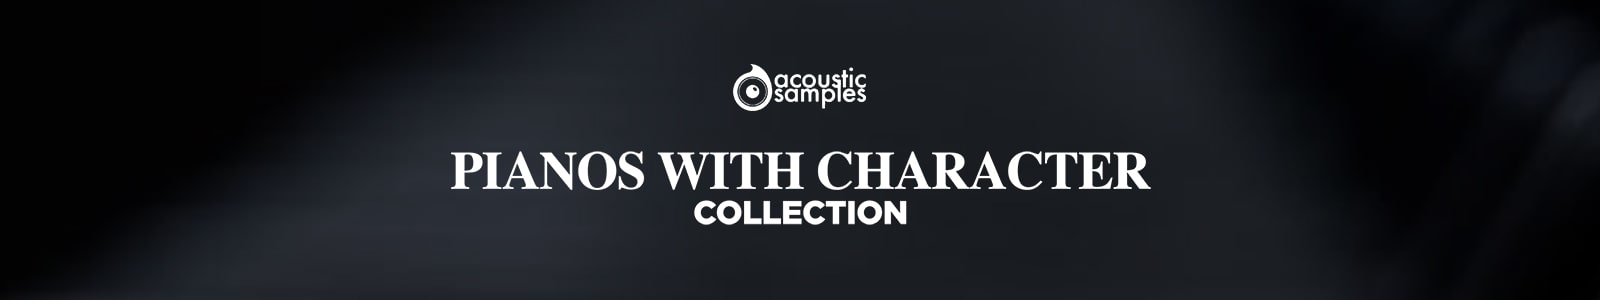 acousticsamples pianos collection